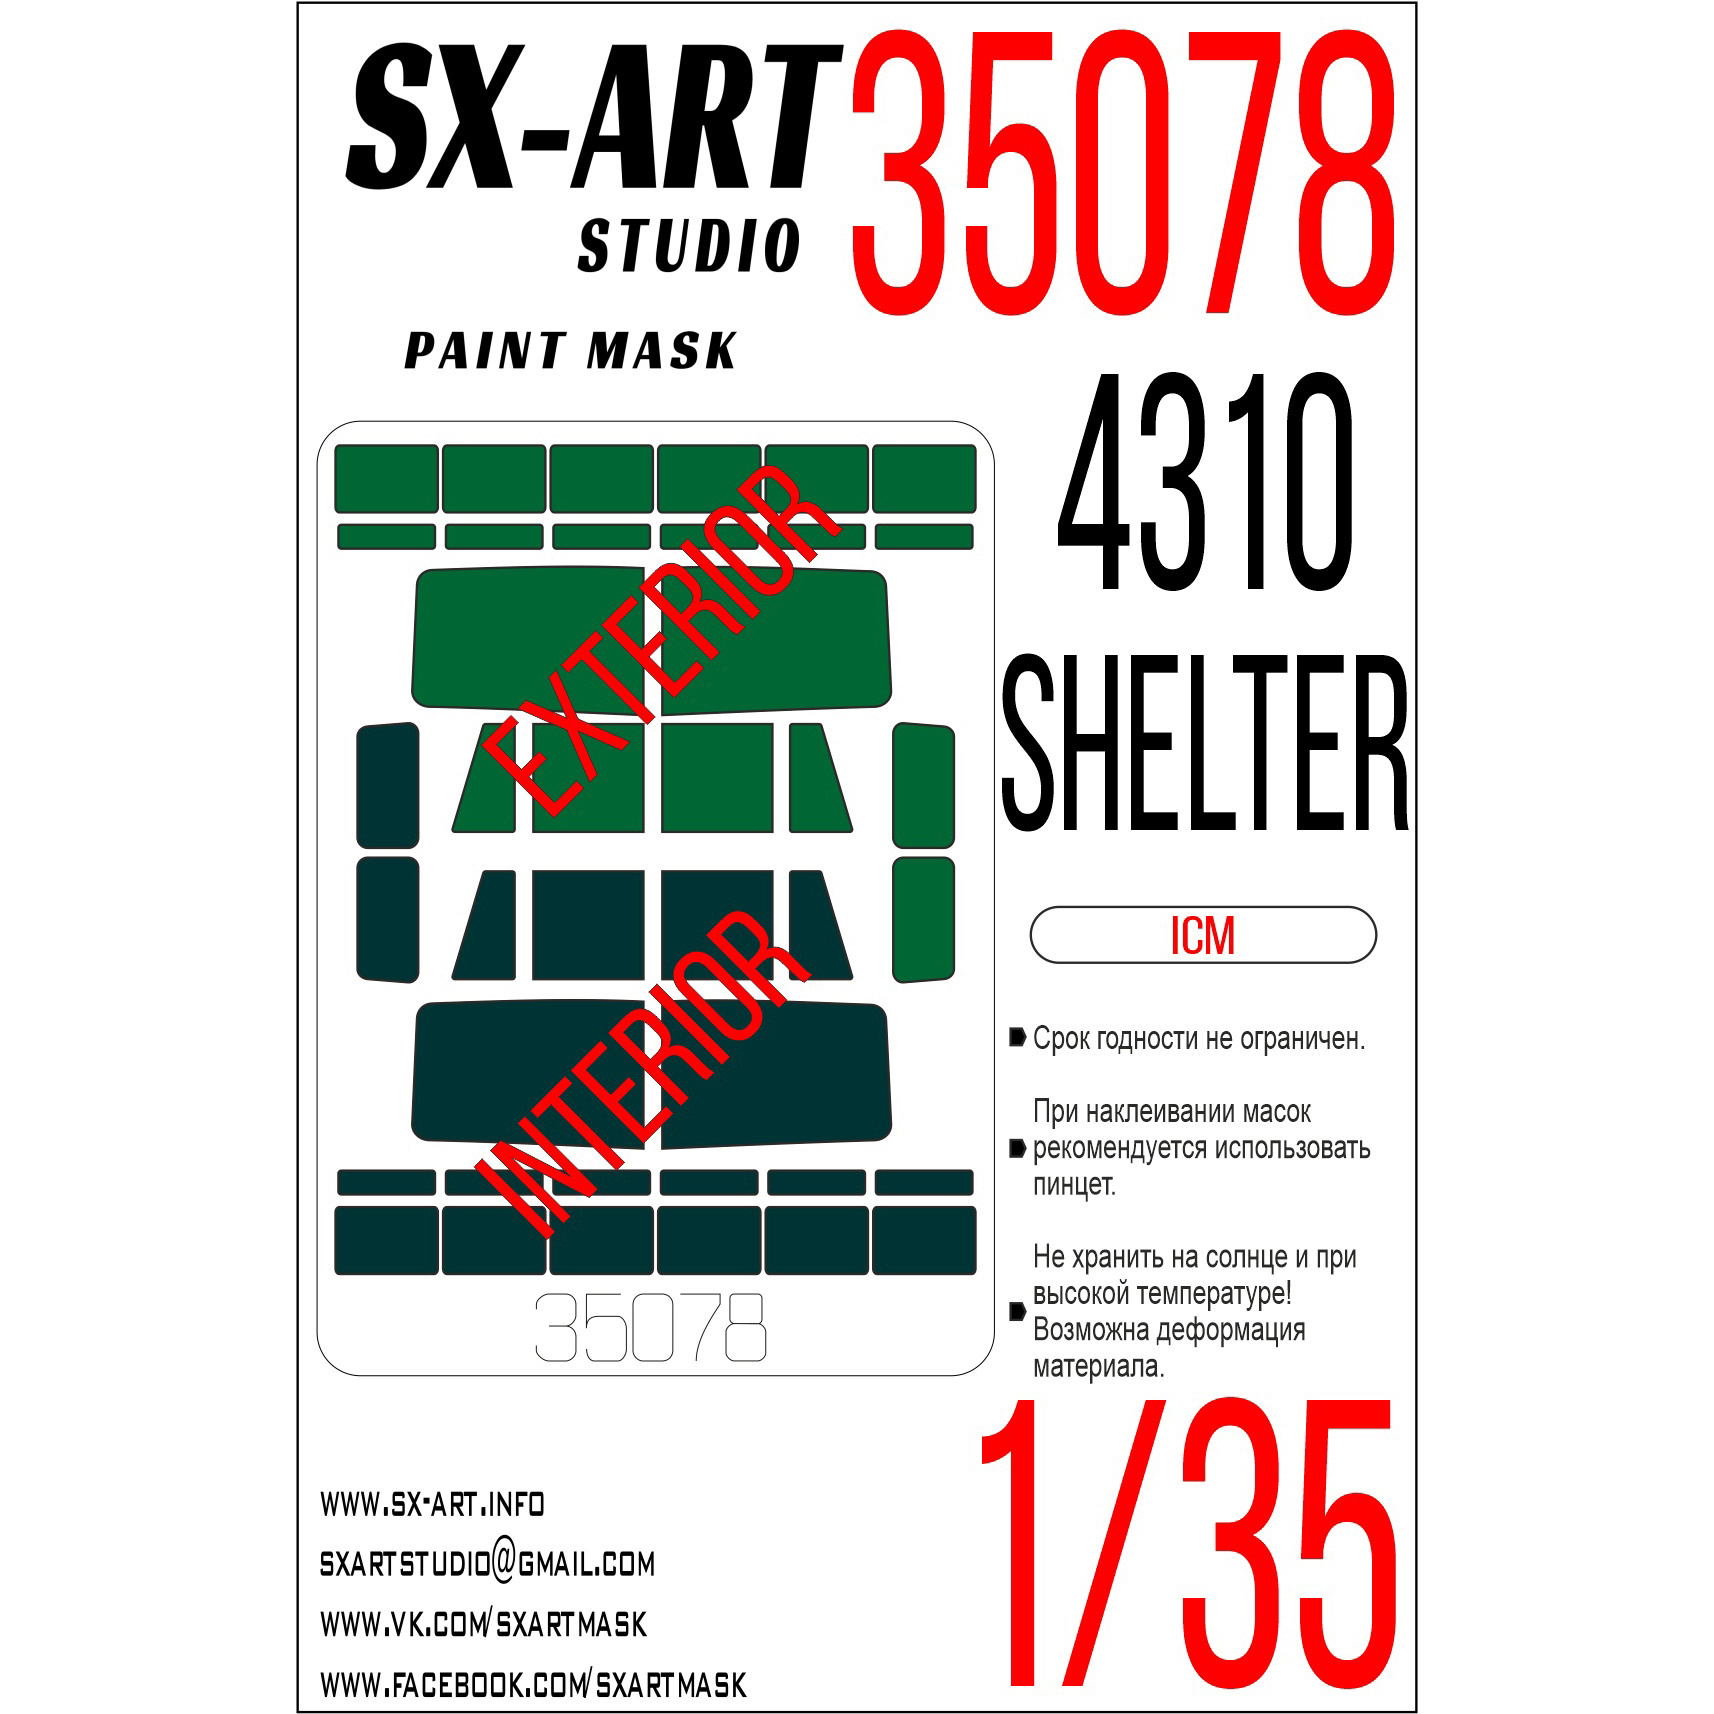 35078 SX-Art 1/35 Paint Mask Paint mask K-4310 + Shelter (ICM)